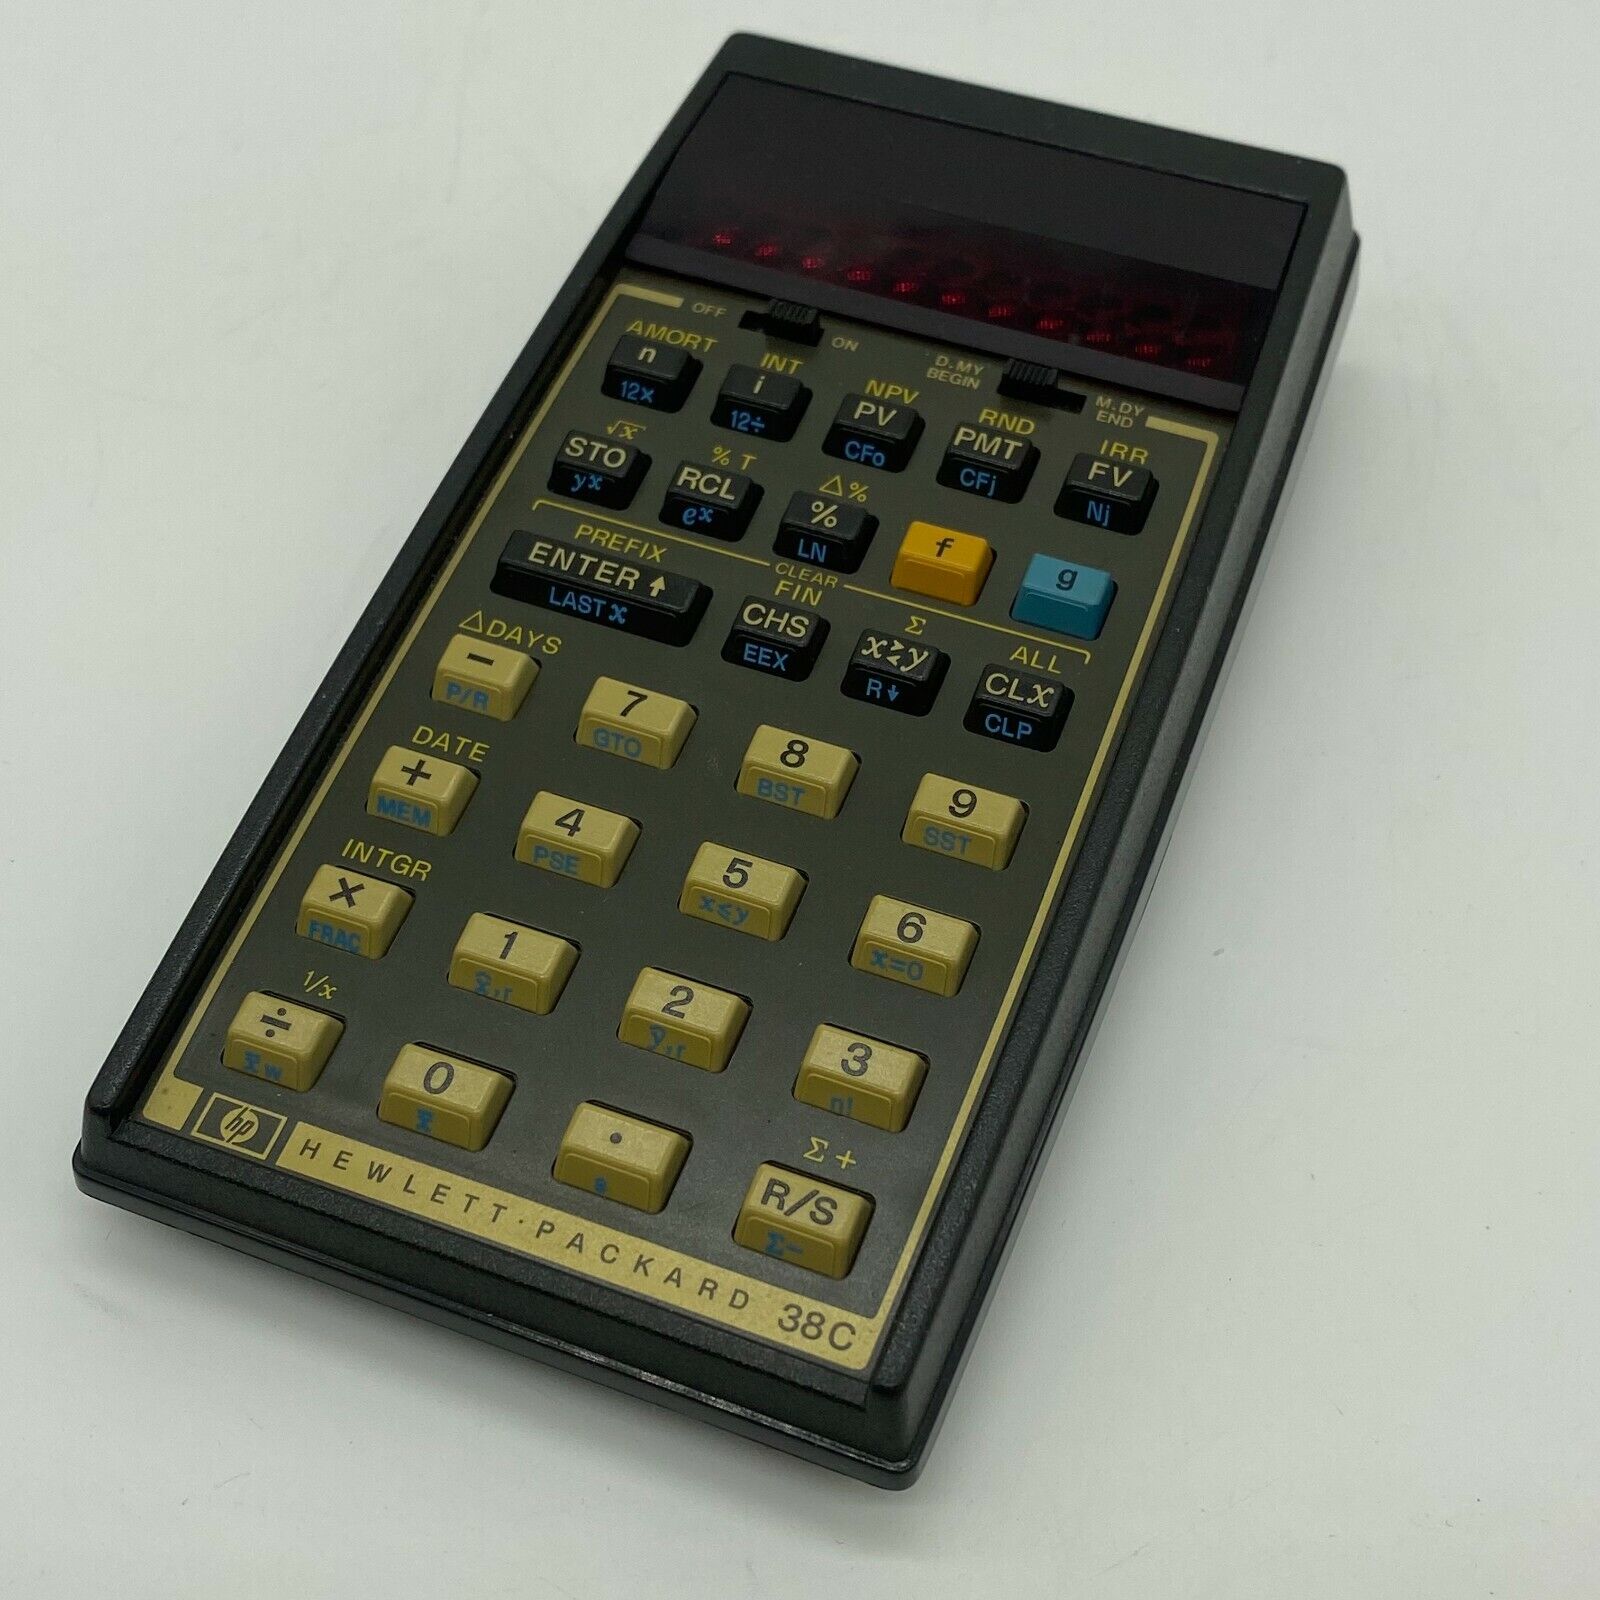 Hewlett Packard HP 38C Calculator Vintage Financial Programmable NO BATTERY